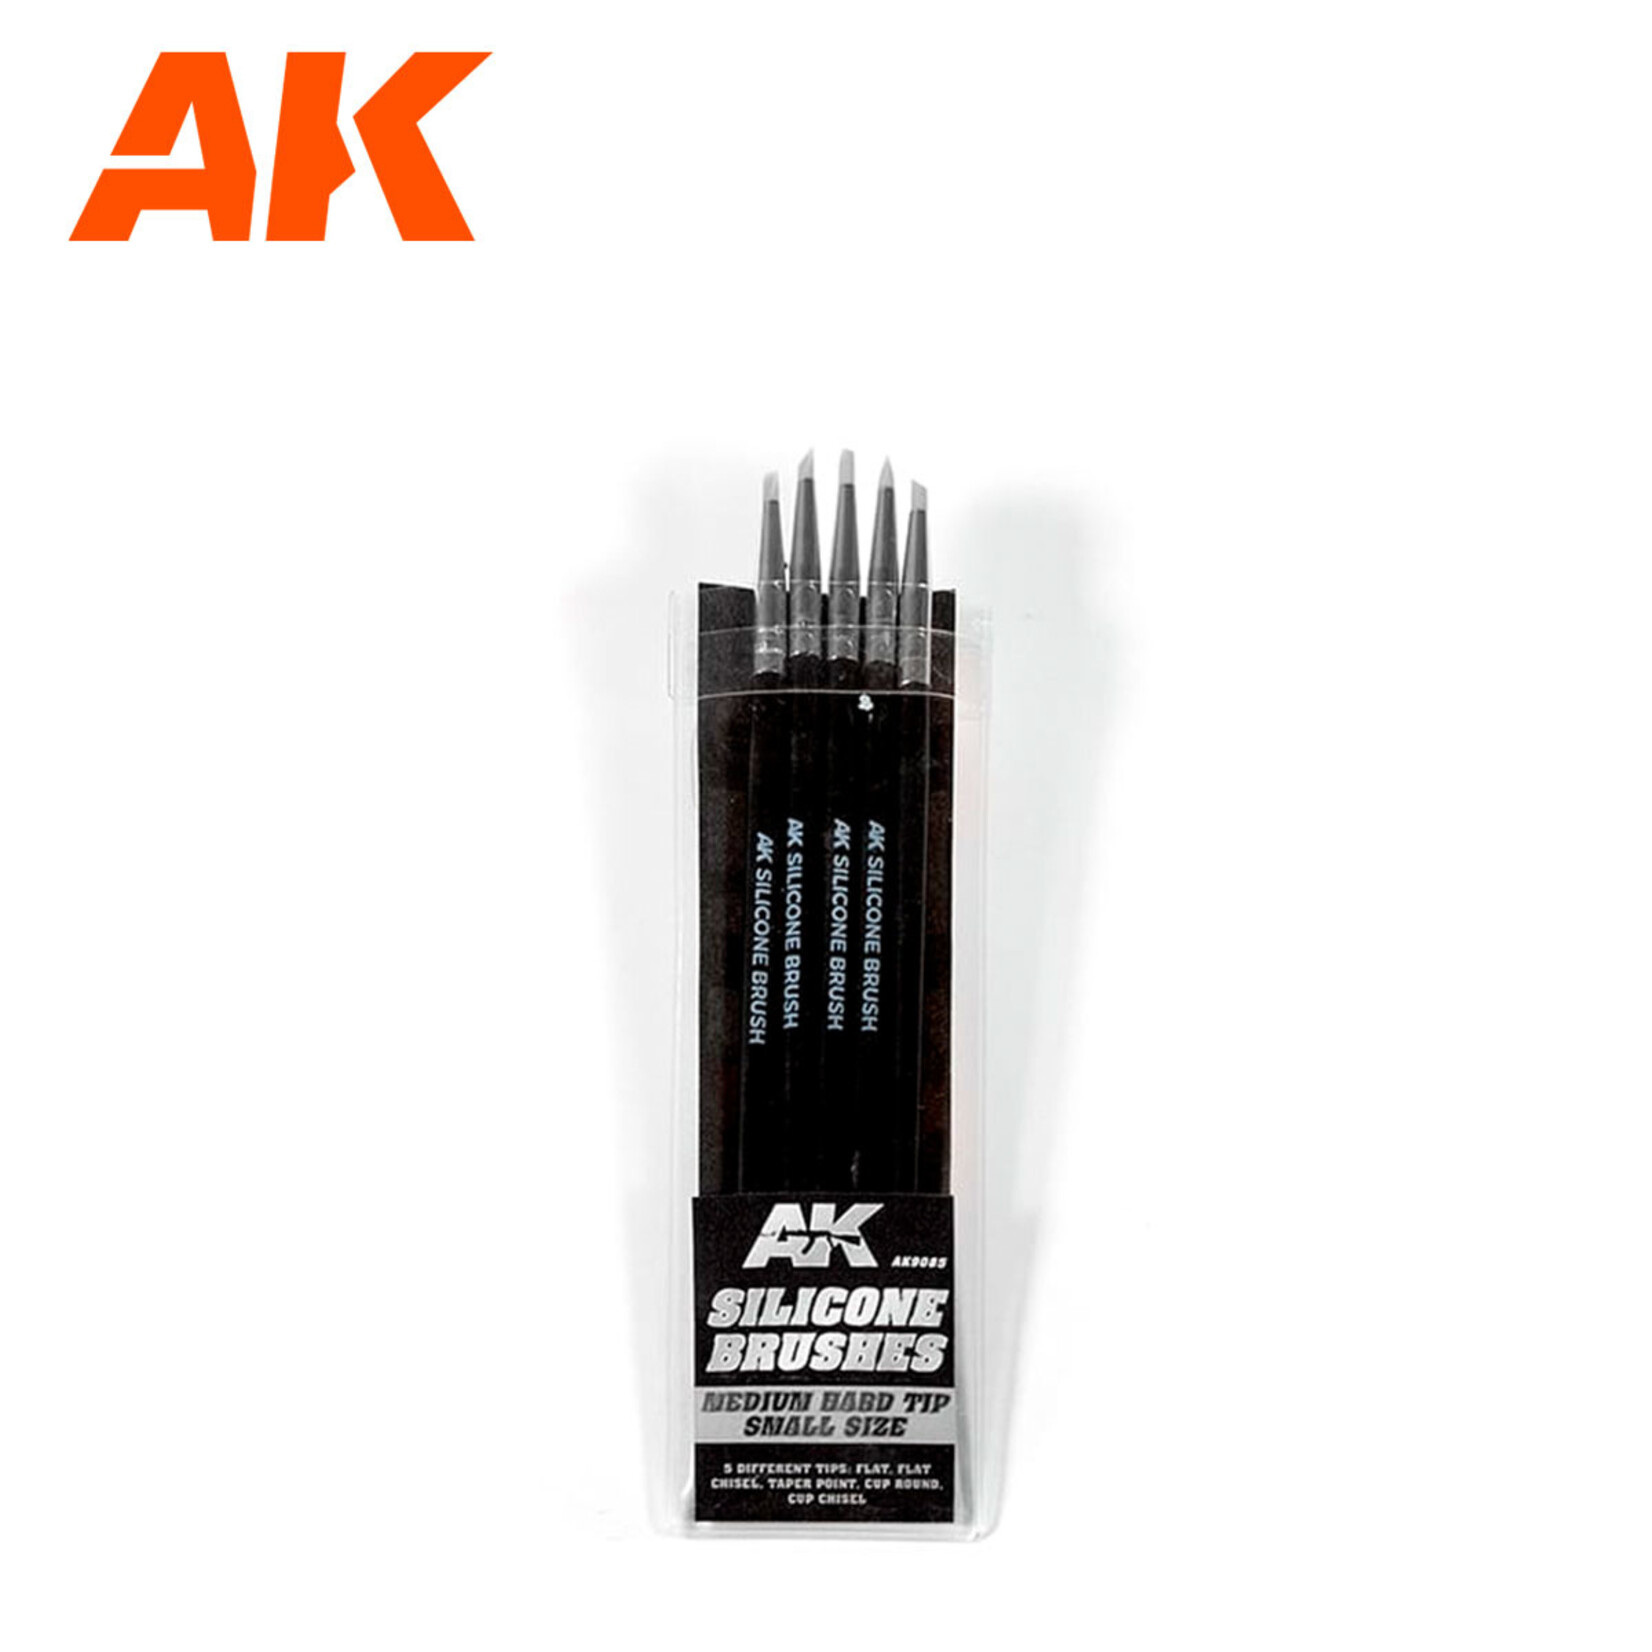 AK Interactive AK Silicone Brushes Medium Tip Small Size